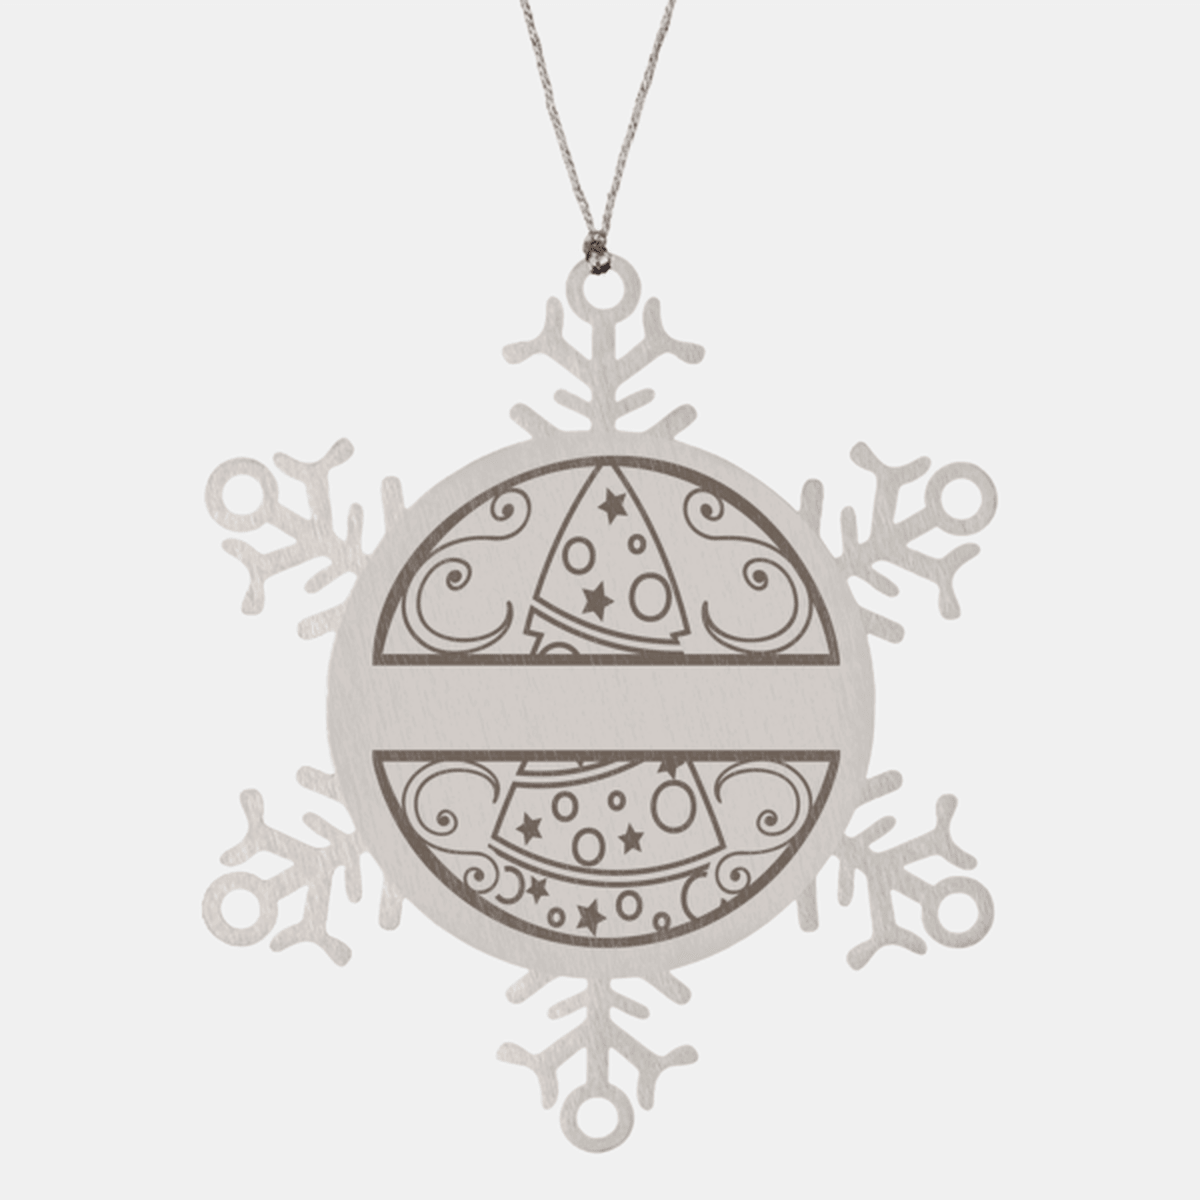 Personalized Family Name Laser Engraved Stainless Steel Snowflake Tree Keepsake Ornament - Mallard Moon Gift Shop